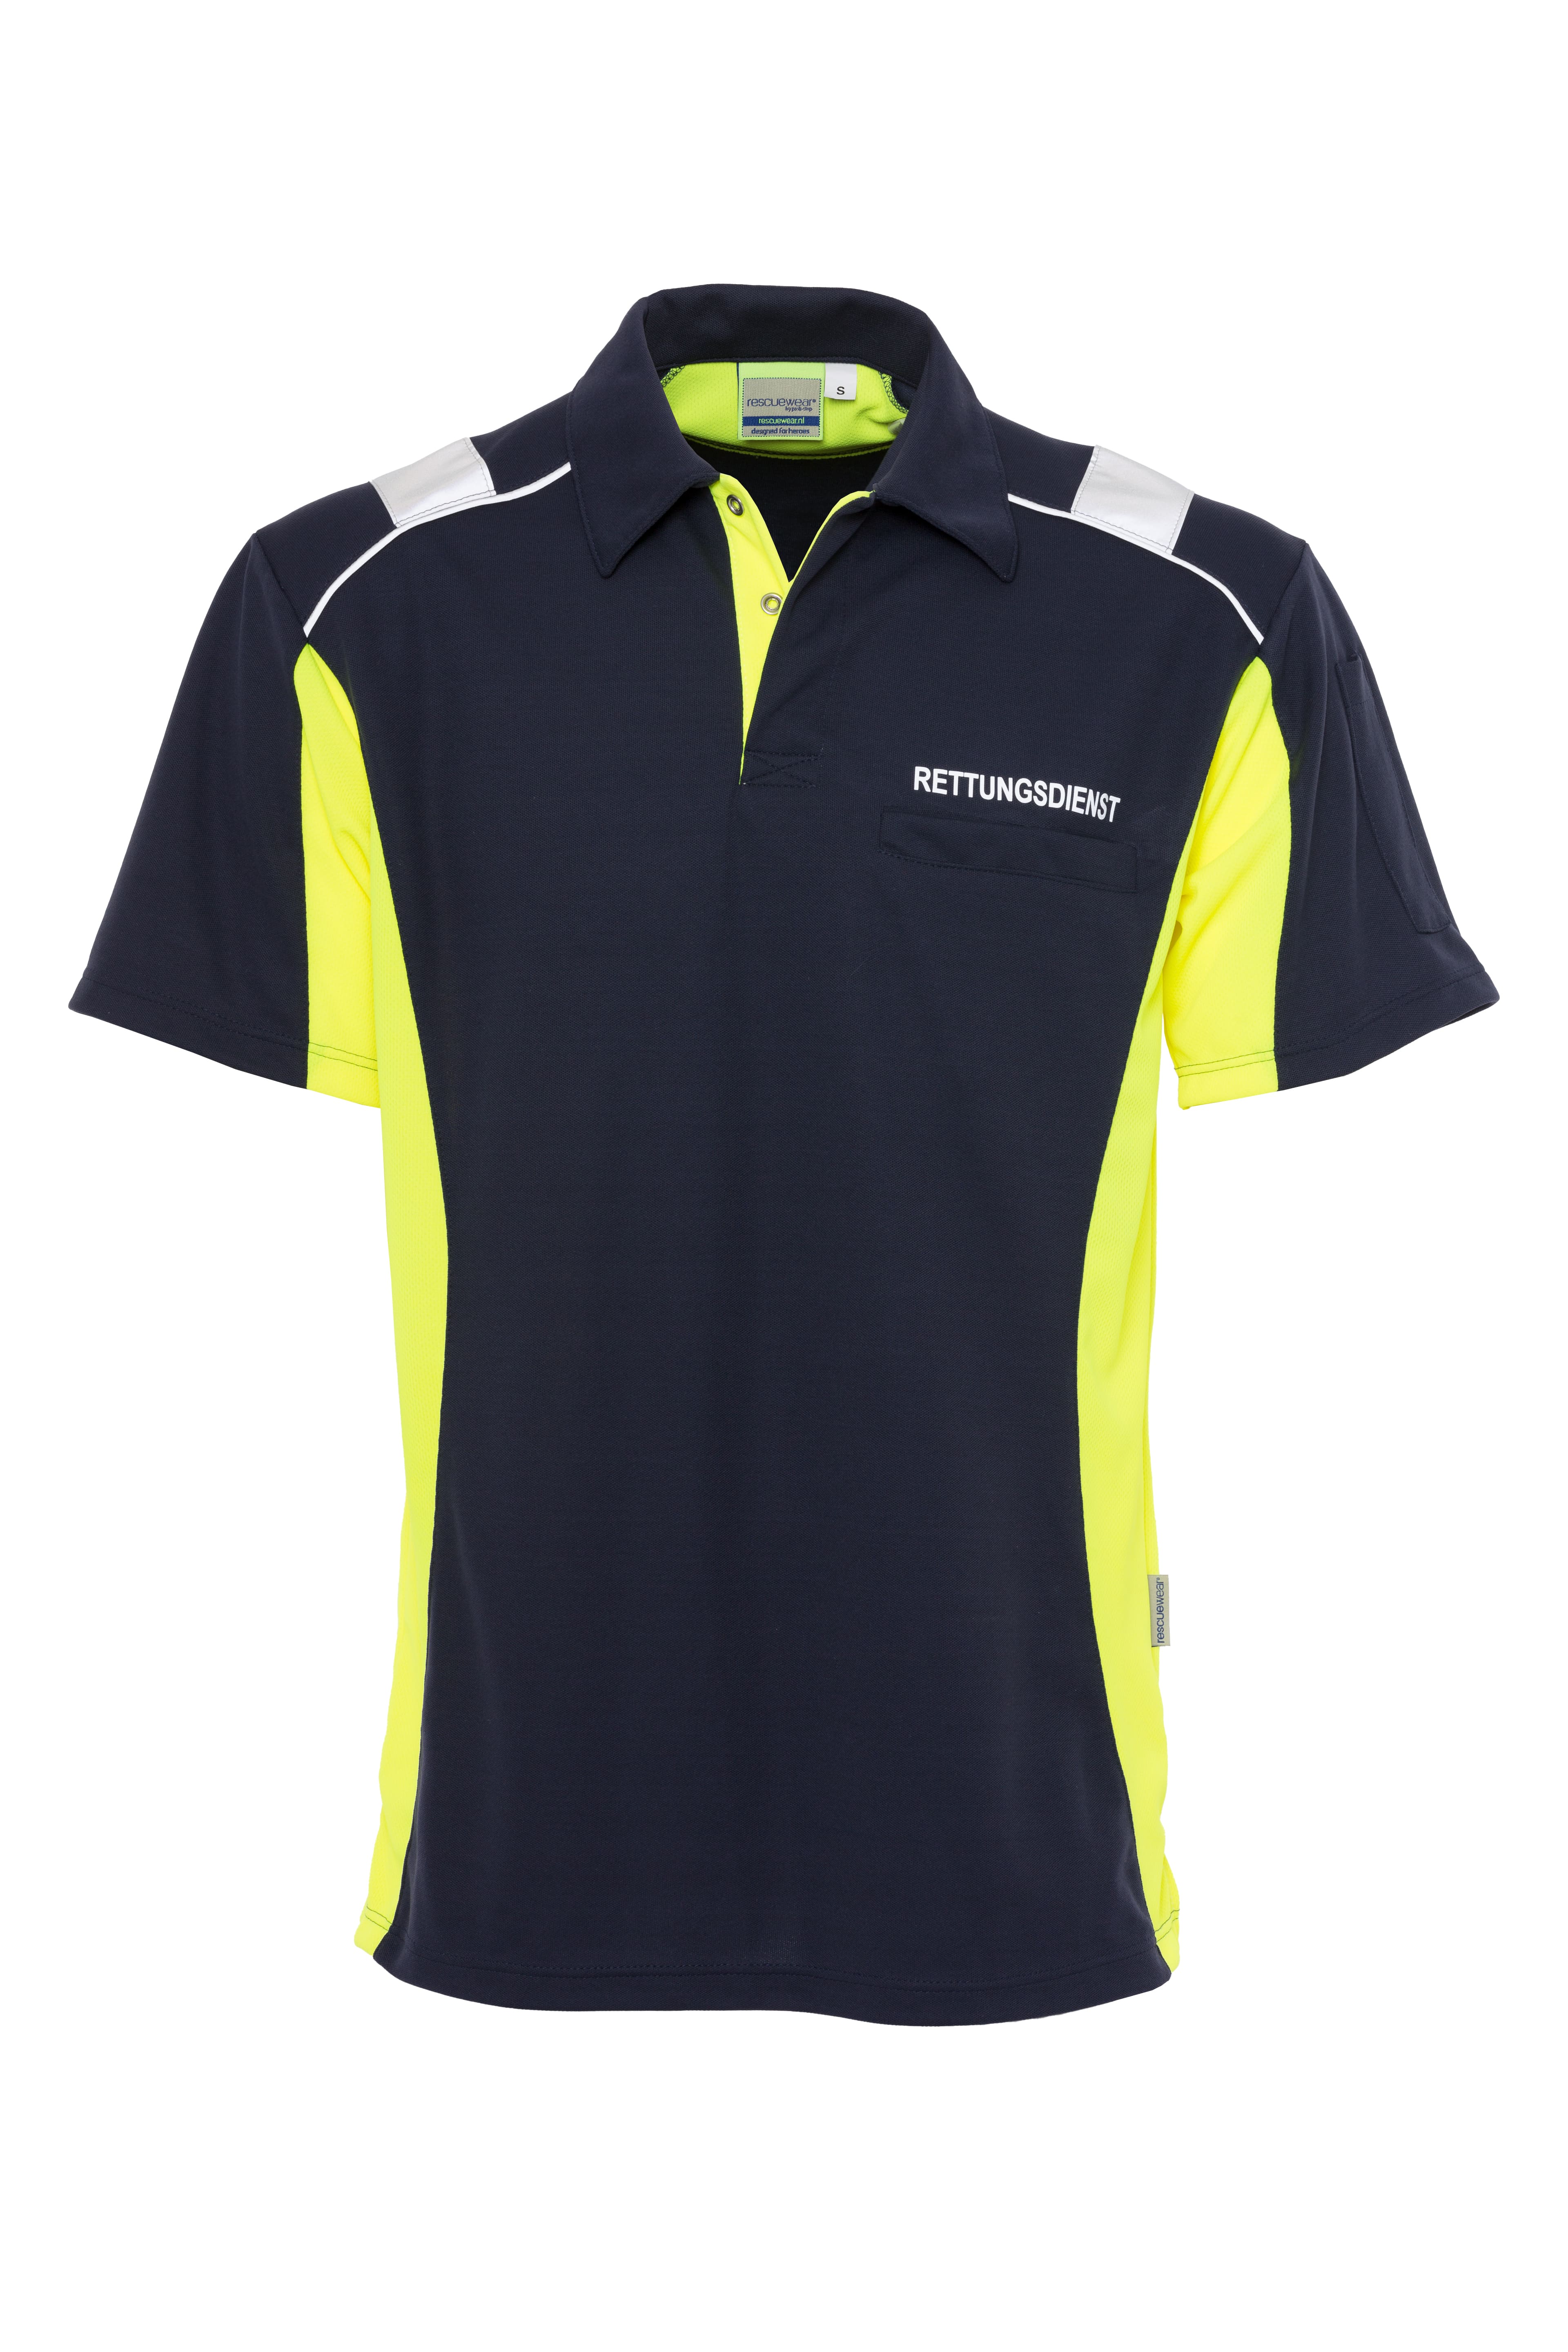 Rescuewear Poloshirt kurze Ärmel Dynamic Marineblau / Neon Gelb - 4XL